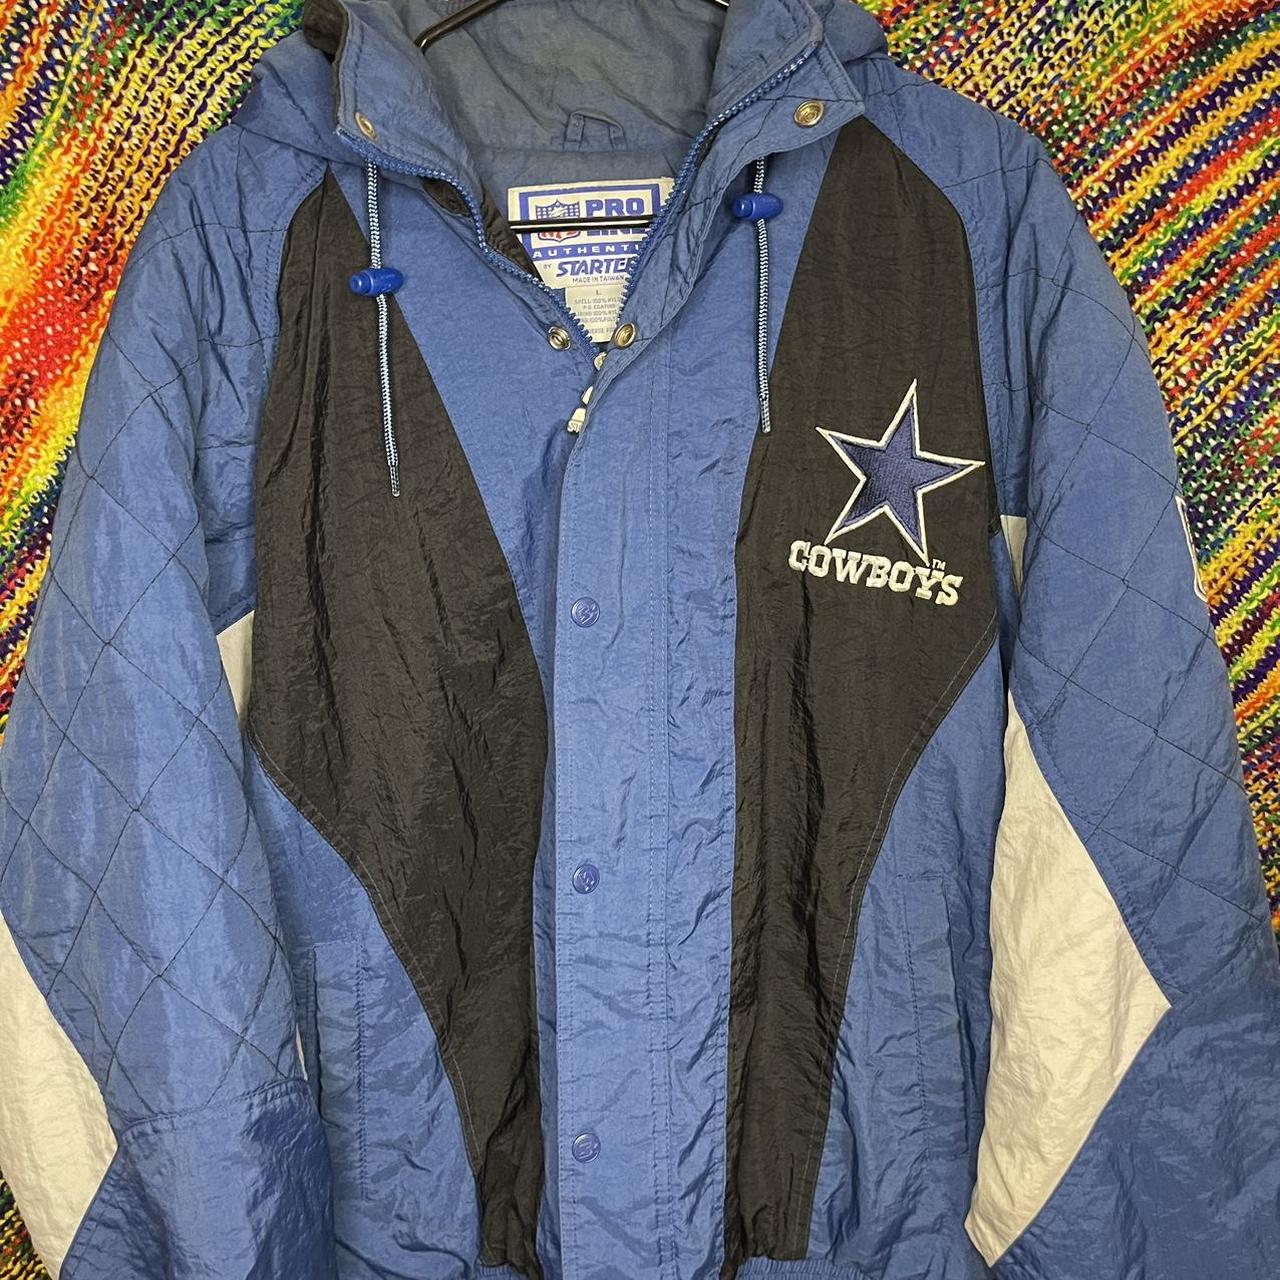 Vintage 1990s Starter Dallas Cowboys Blue Hooded Youth Parka